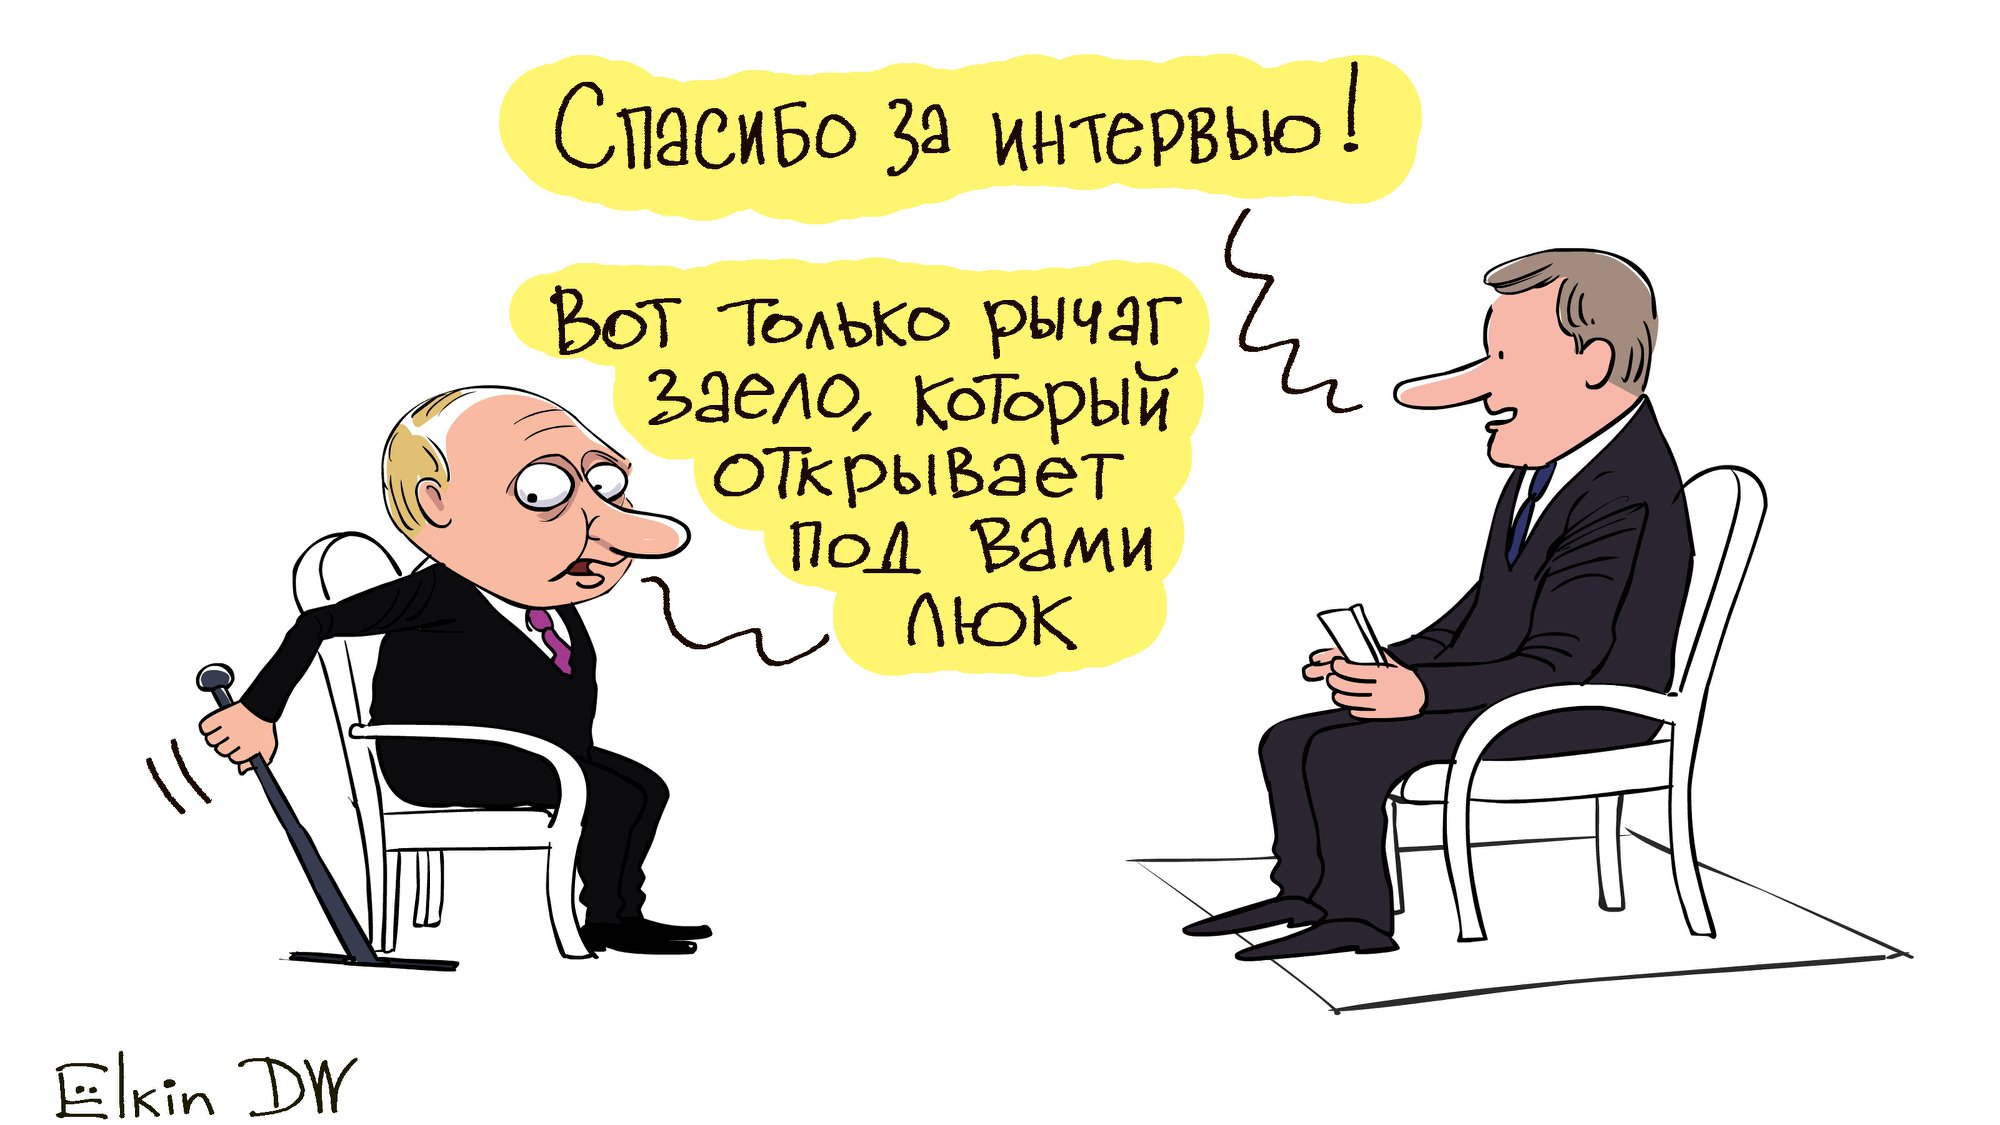 Как у Путина после острого интервью "рычаг заело": карикатура